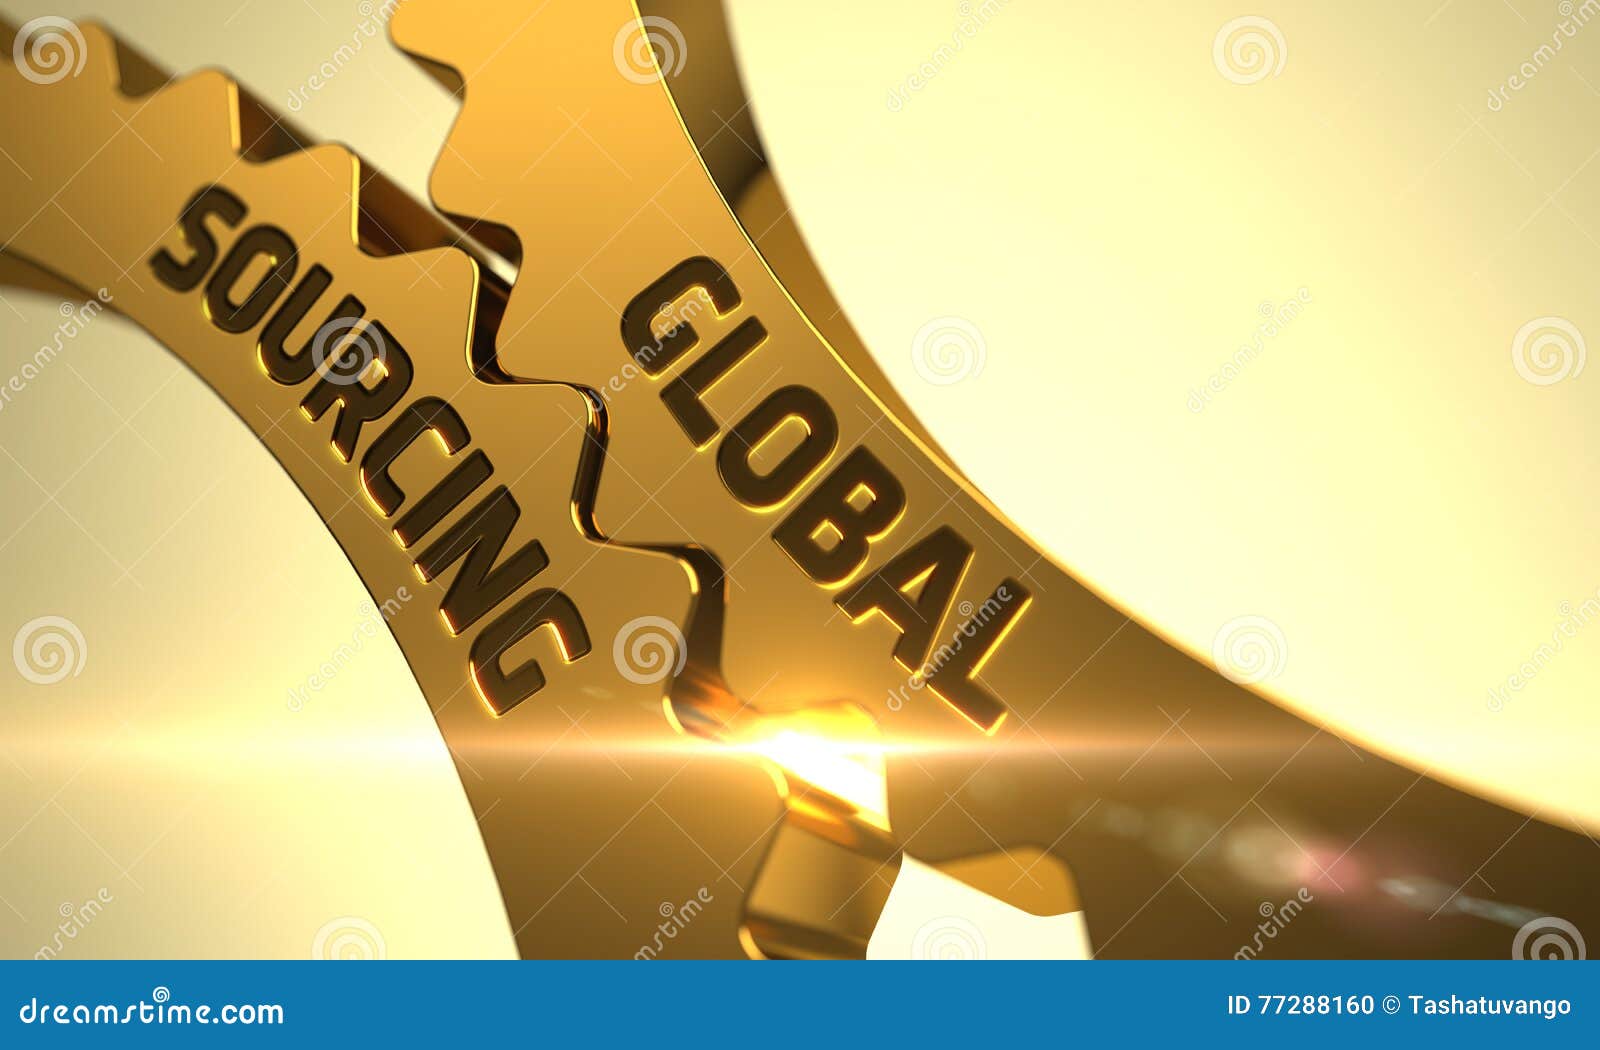 golden metallic gears with global sourcing concept. 3d.